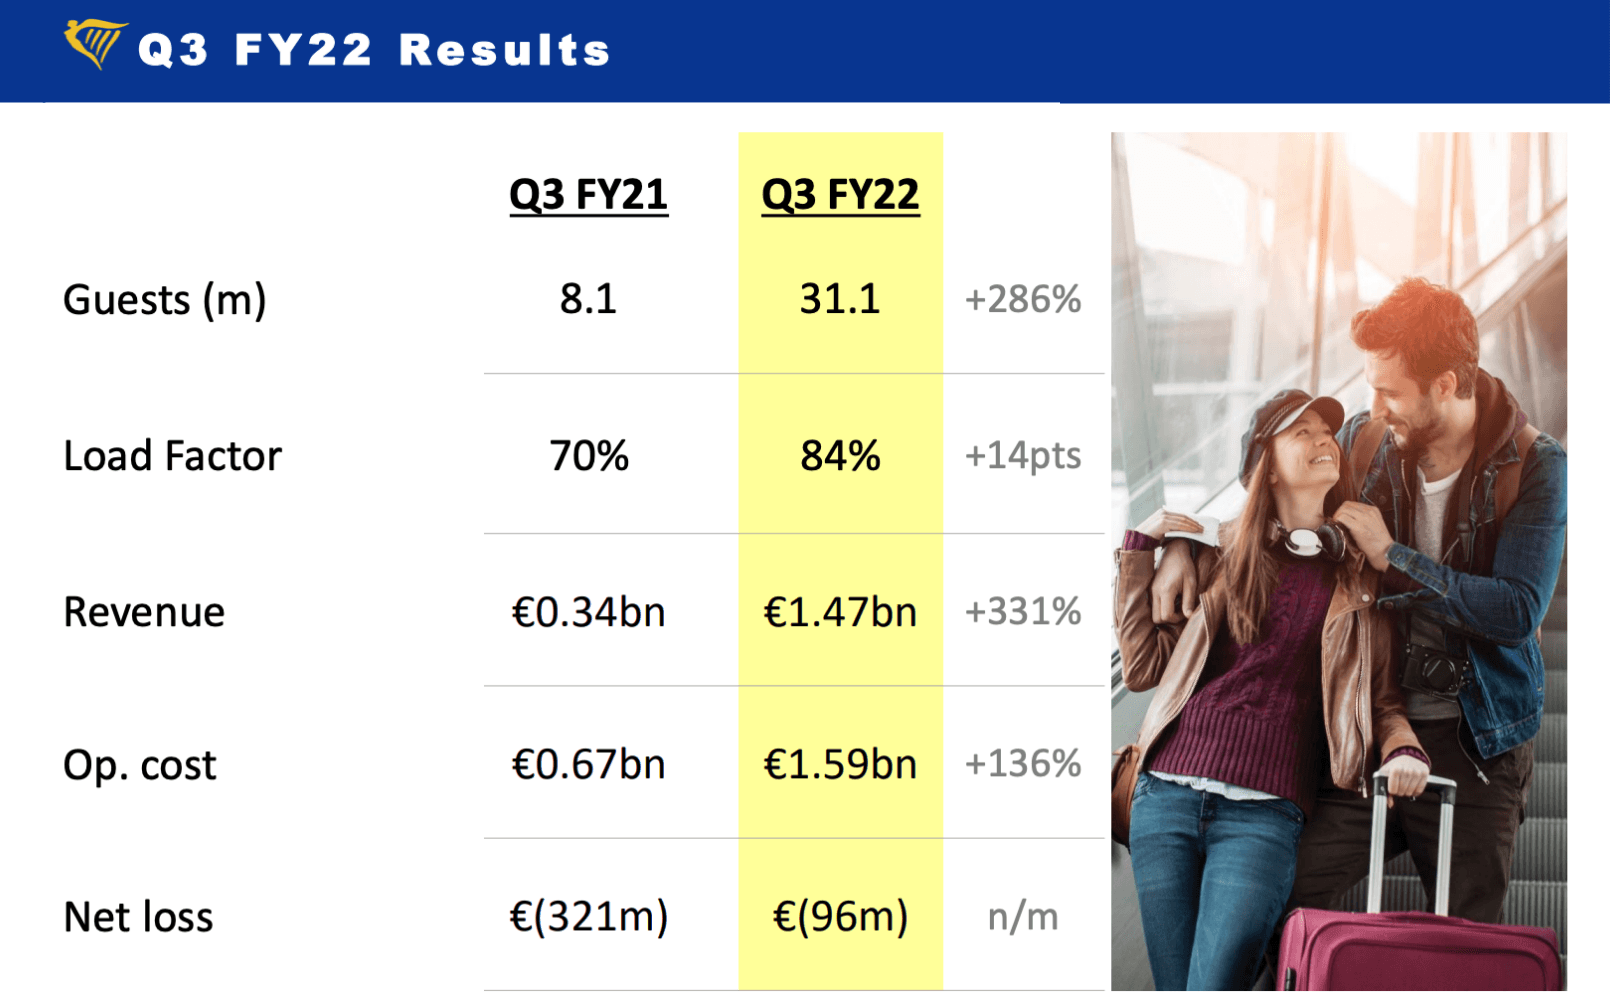 Ryanair results